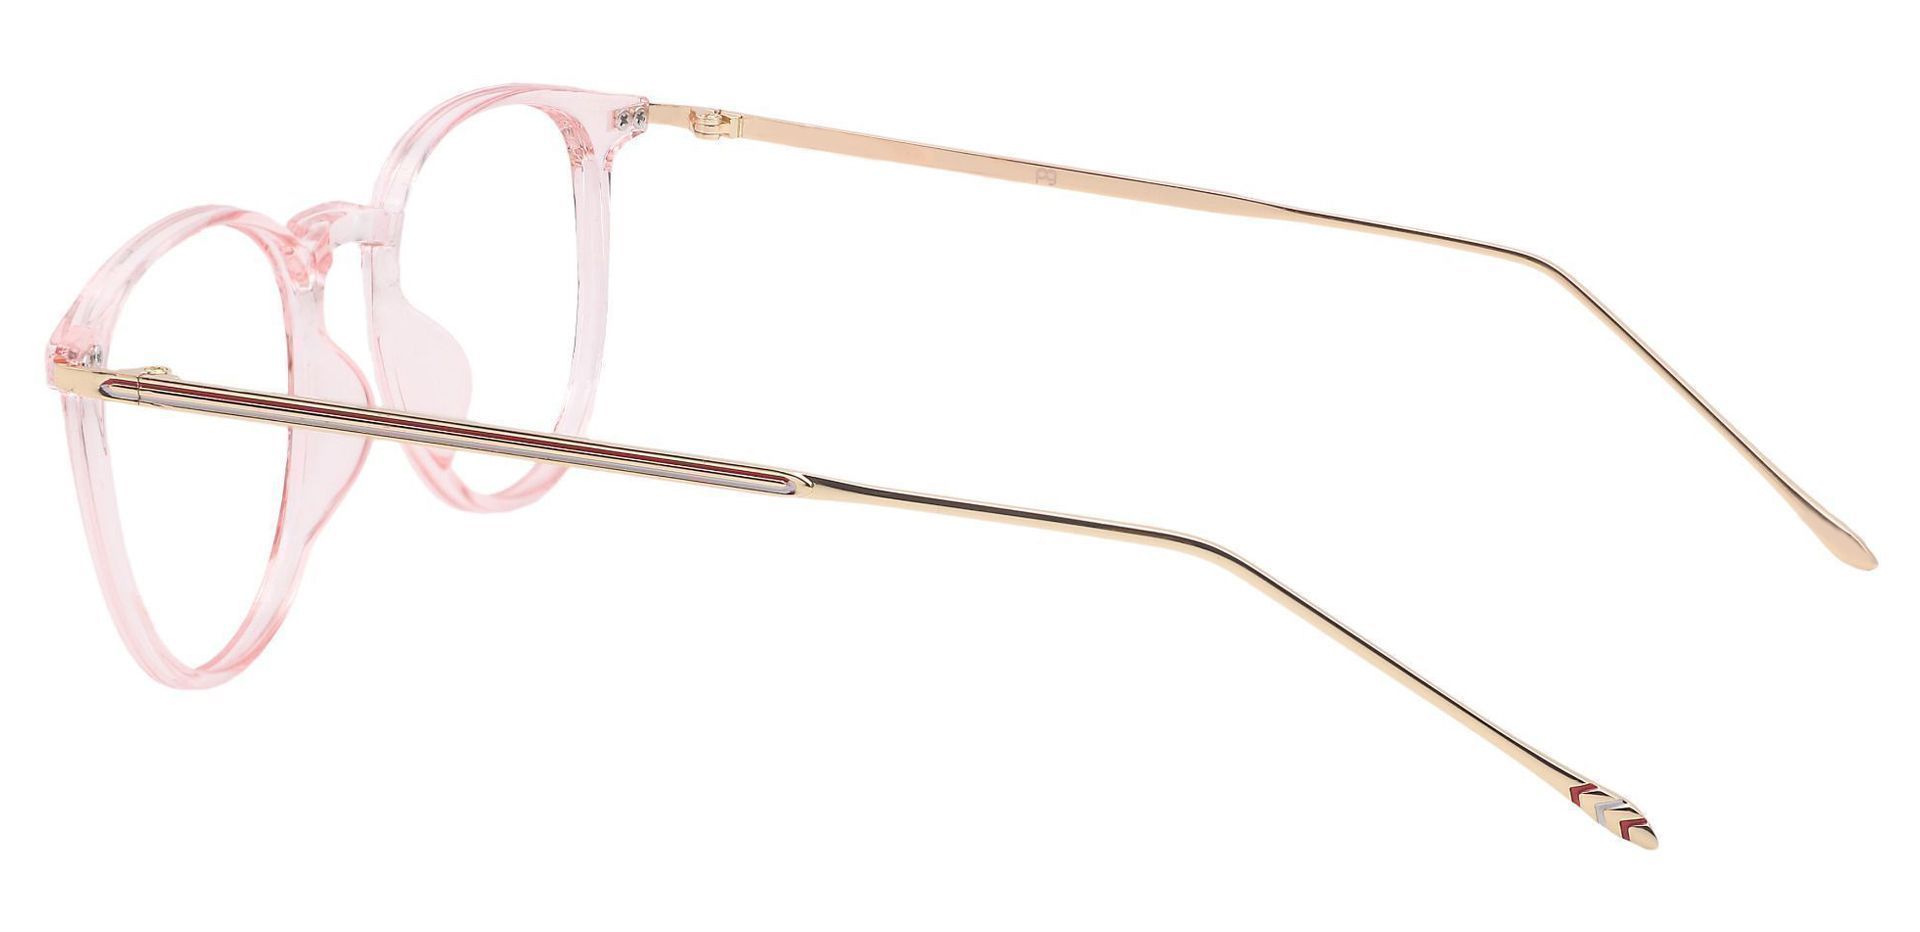 Elliott Round Lined Bifocal Glasses - Pink